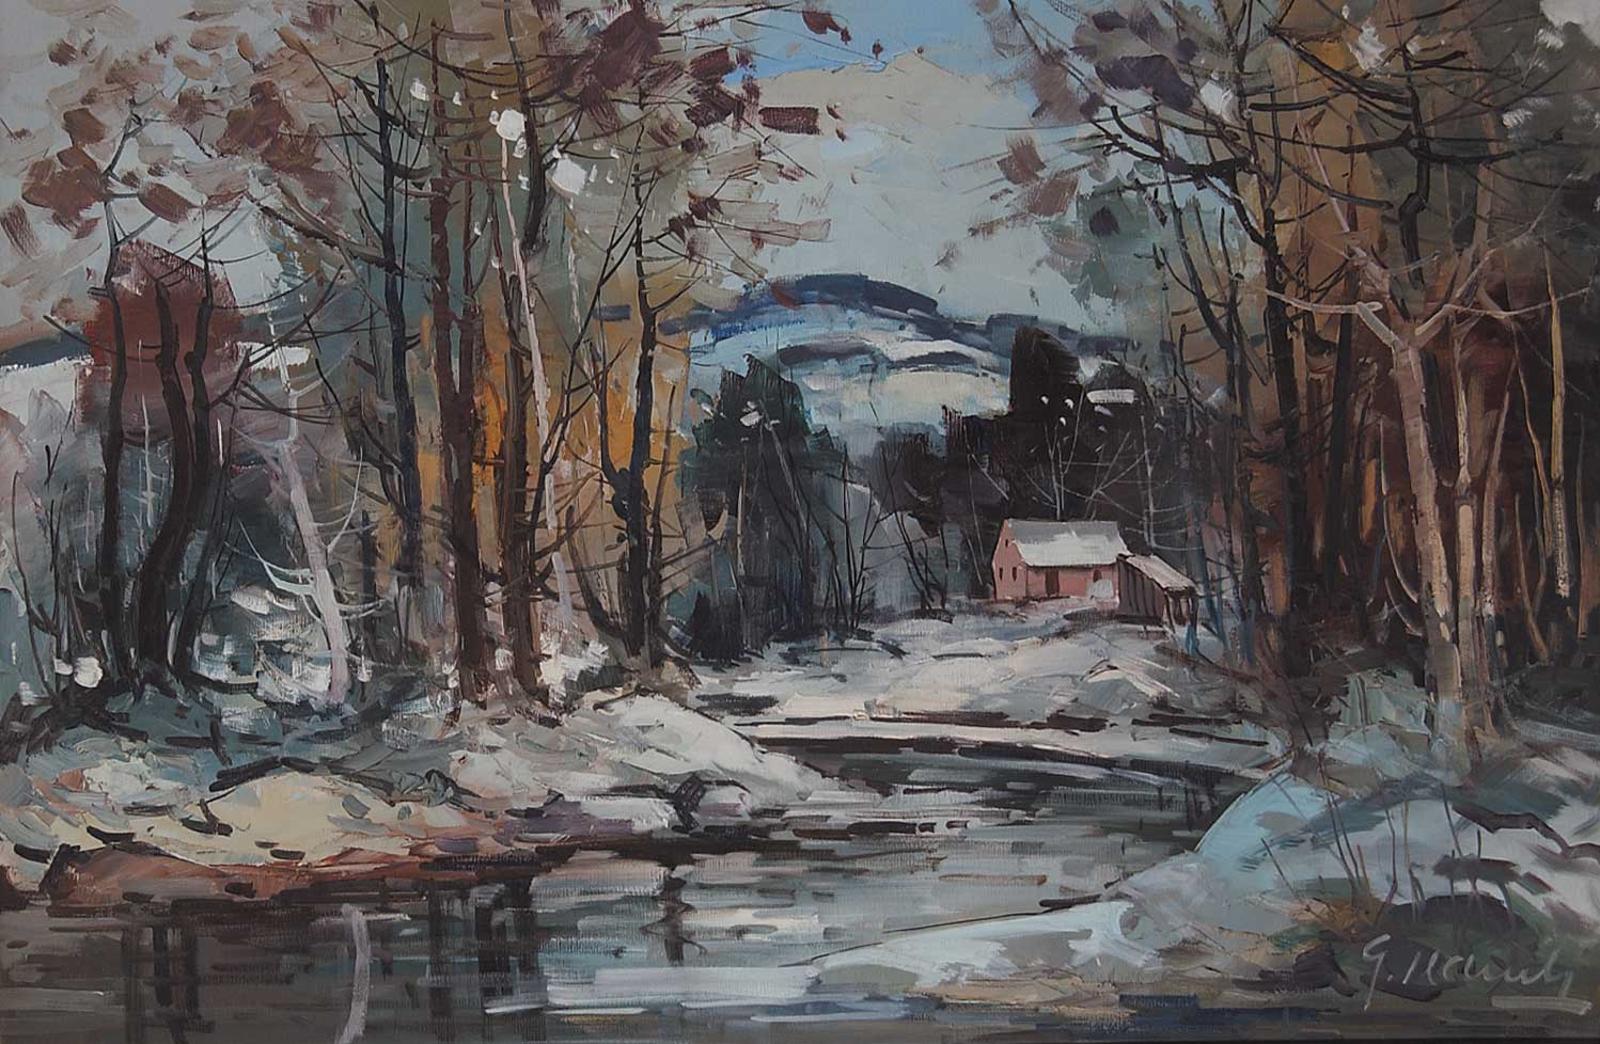 Geza (Gordon) Marich (1913-1985) - Untitled - Cabin by the Stream in Winter